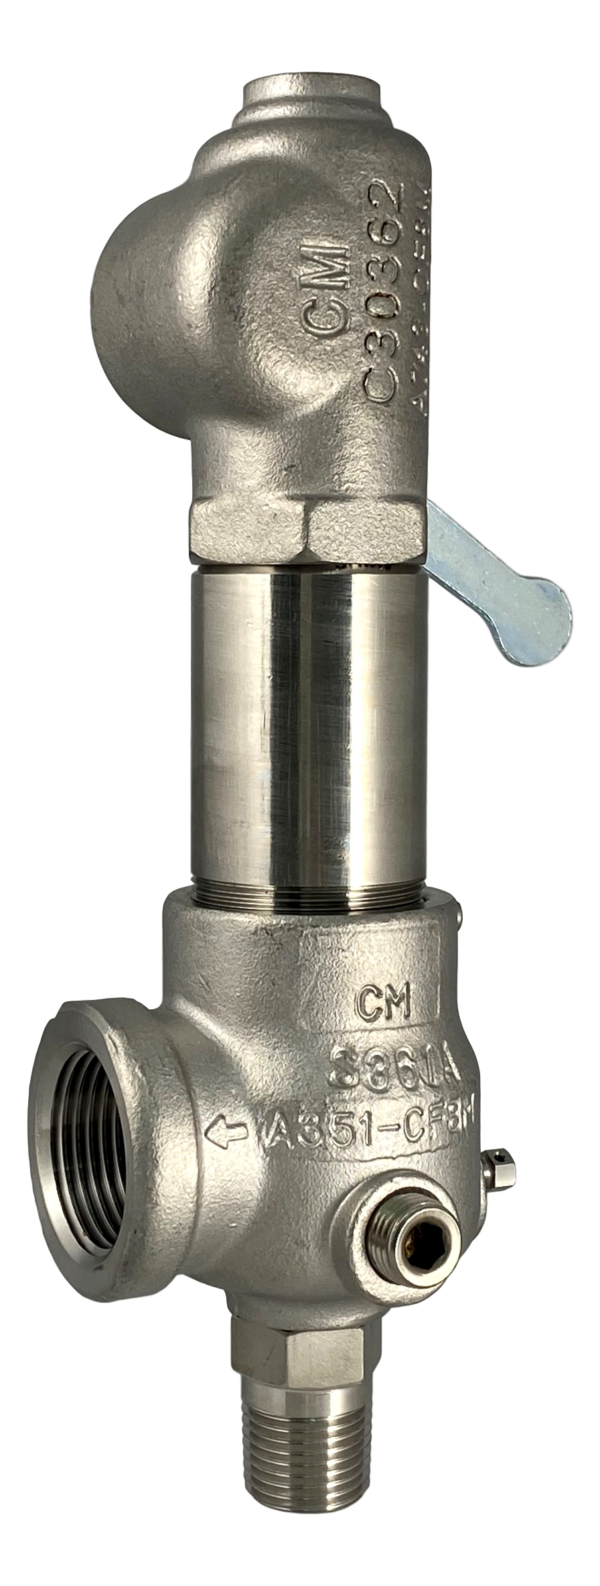 Kunkle 911BHGM06 - 1.5" x 2.5" - Packed Lever - Buy Kunkle valves online